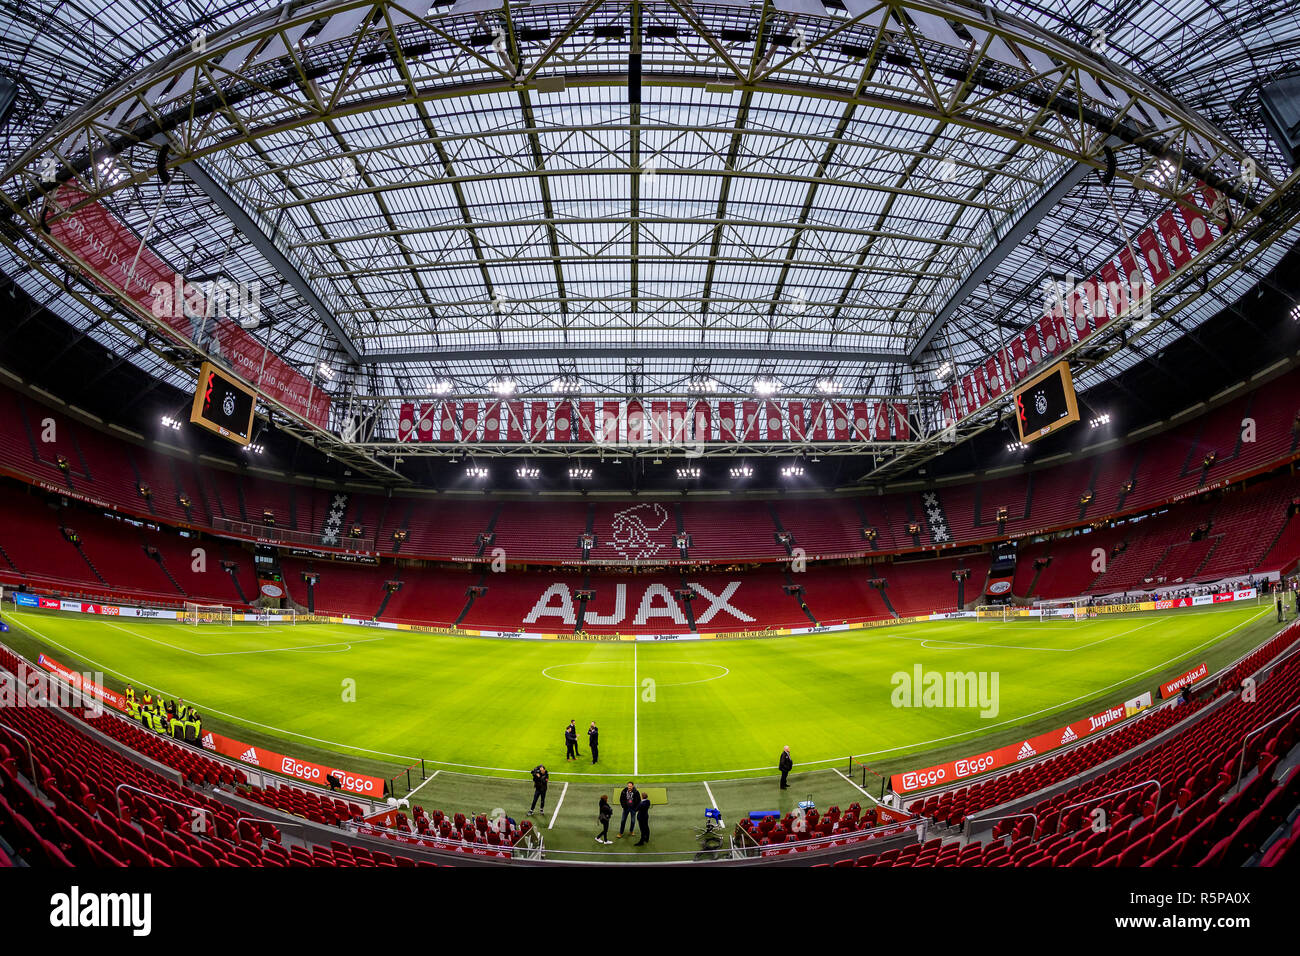 AMSTERDAM, Netherlands, 02-12-2018, football, Johan Cruijff ArenA, Dutch eredivisie, season 2018/2019, stadium overview, before the match Ajax - ADO, Stock Photo